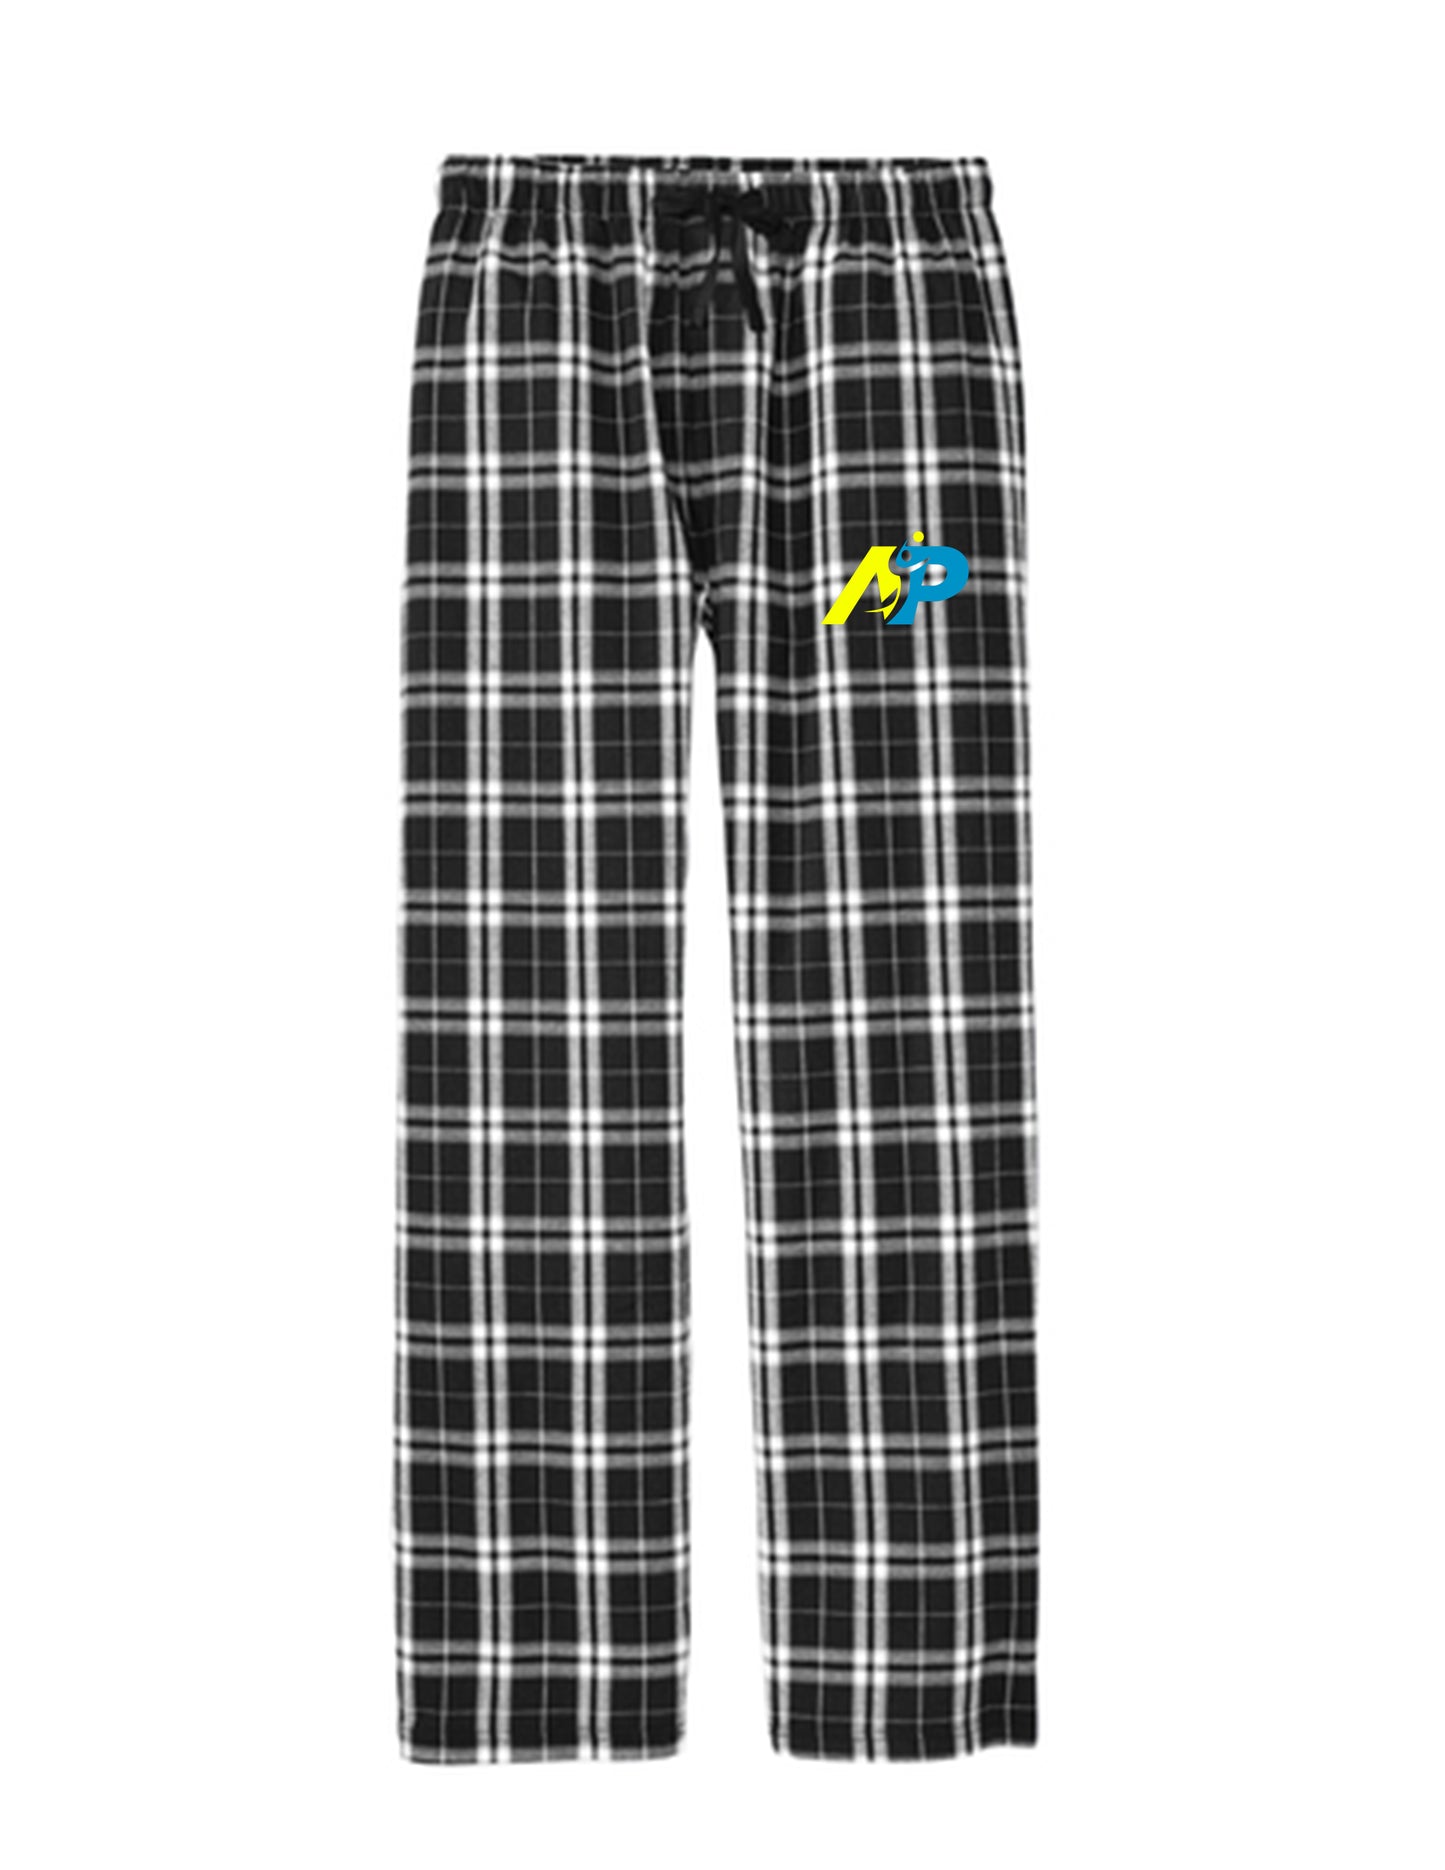 Unisex Flannel Pajama Pants (WO-176077)